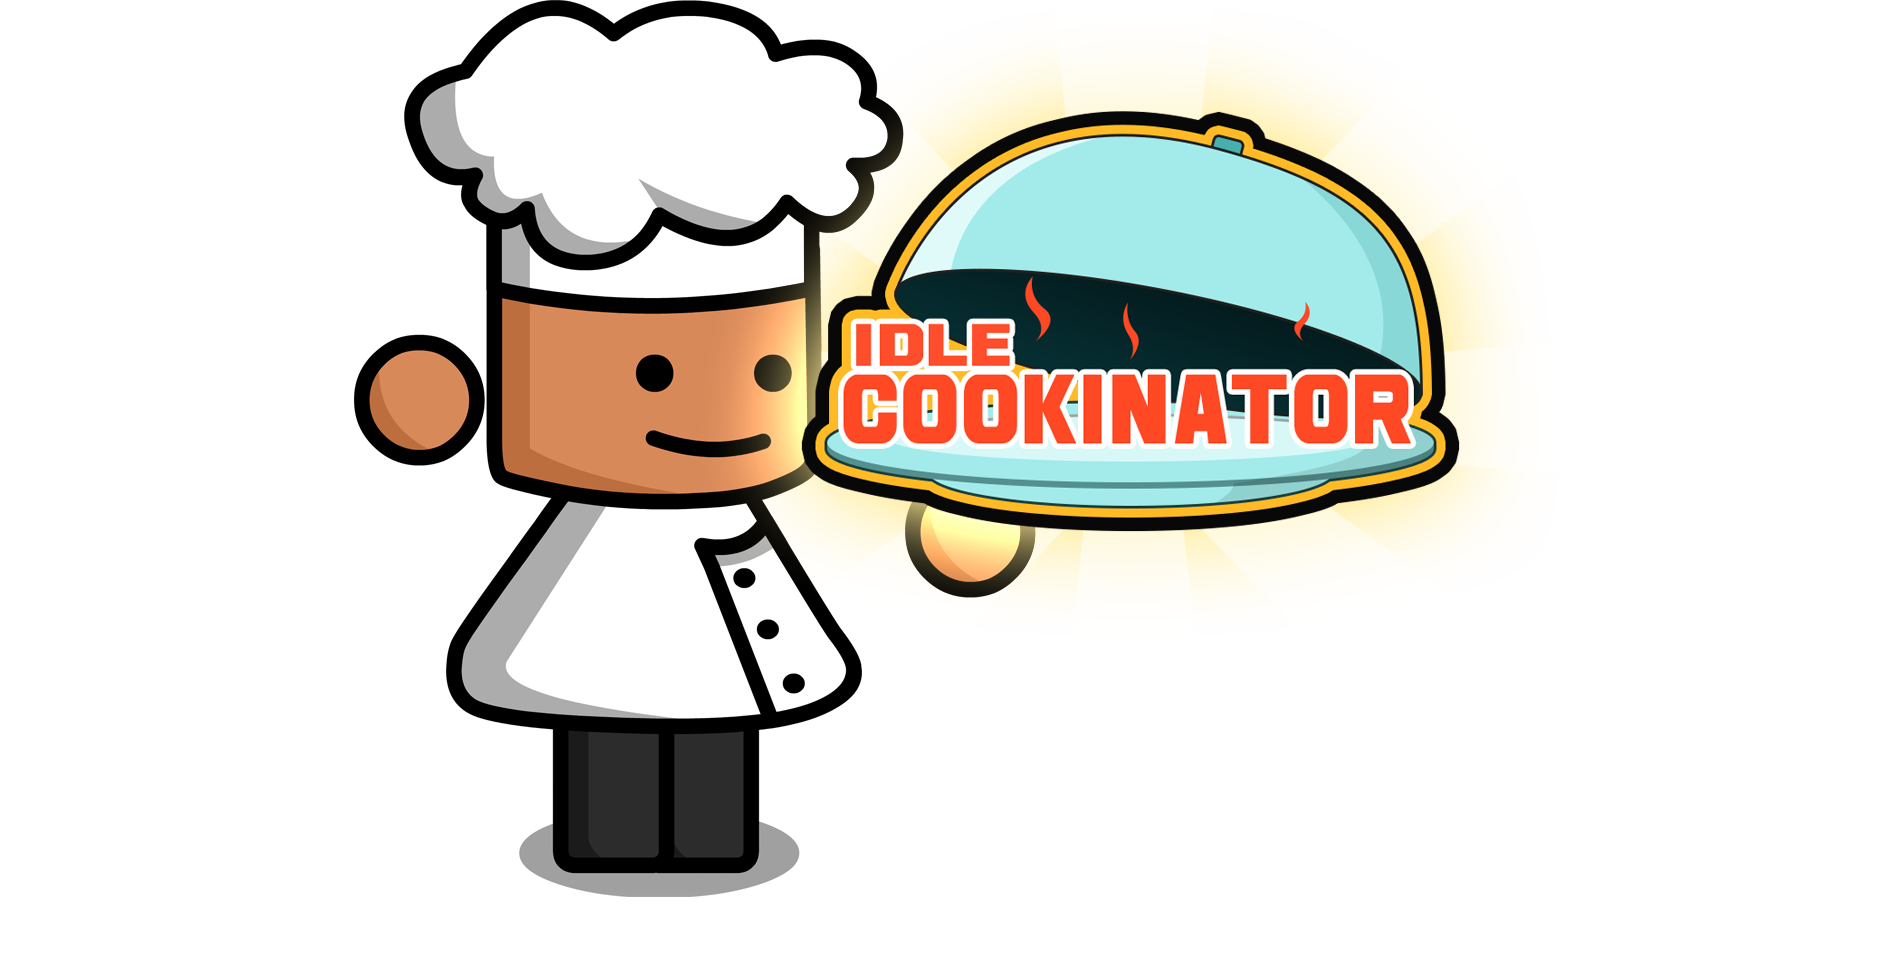 Idle Cookinator Logo